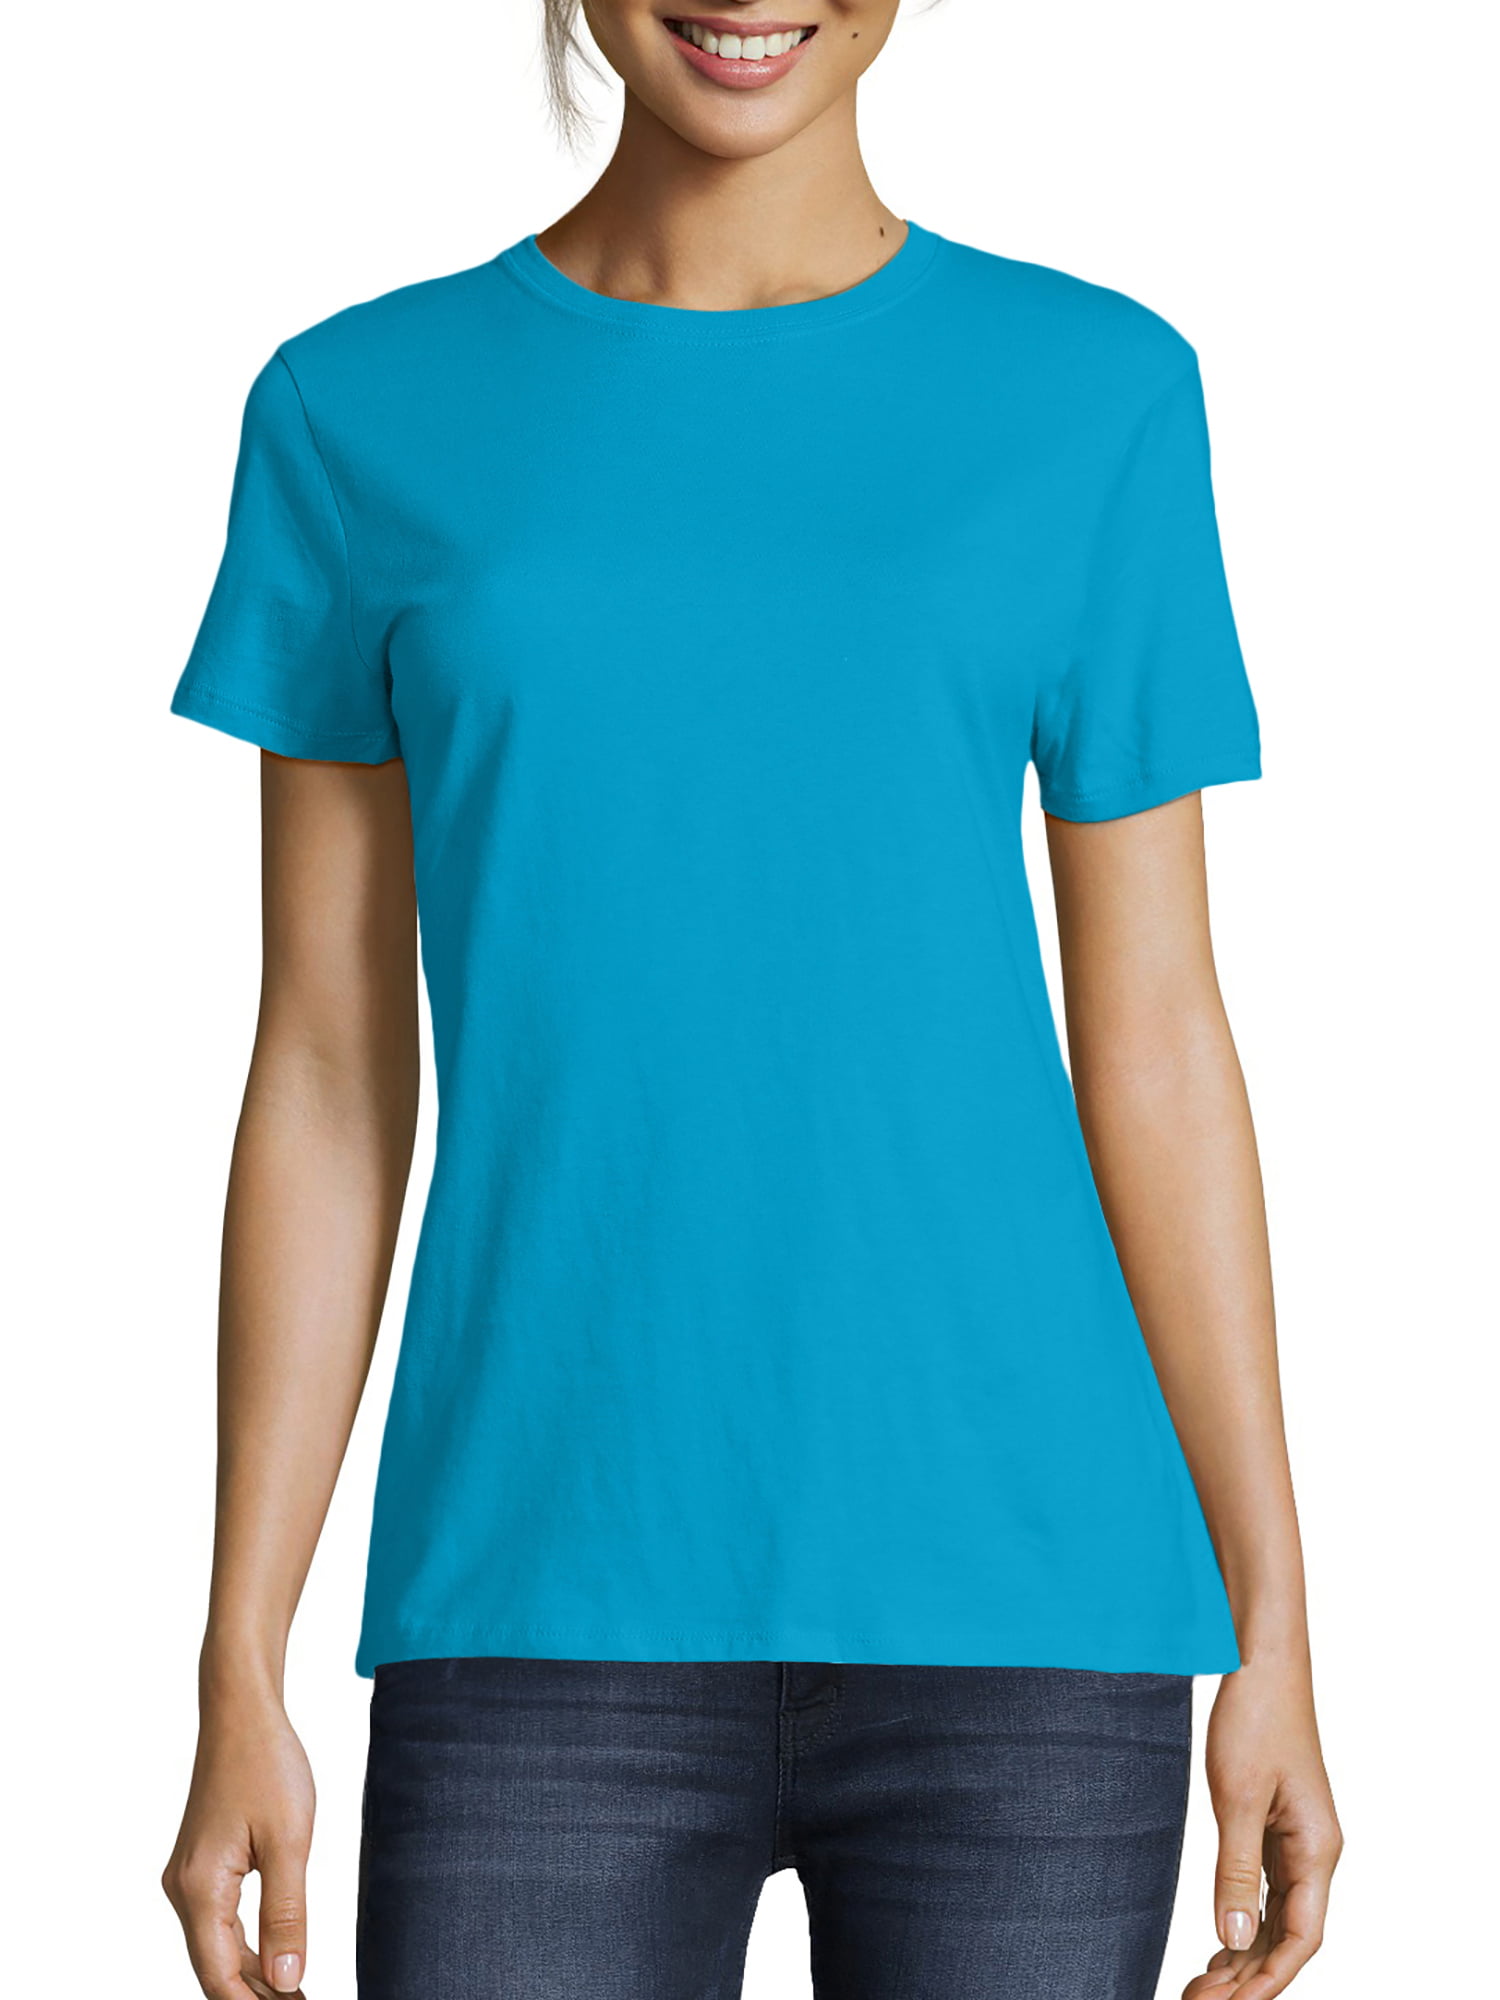 Hanes - Hanes Women's Nano-T Short Sleeve T-Shirt - Walmart.com ...